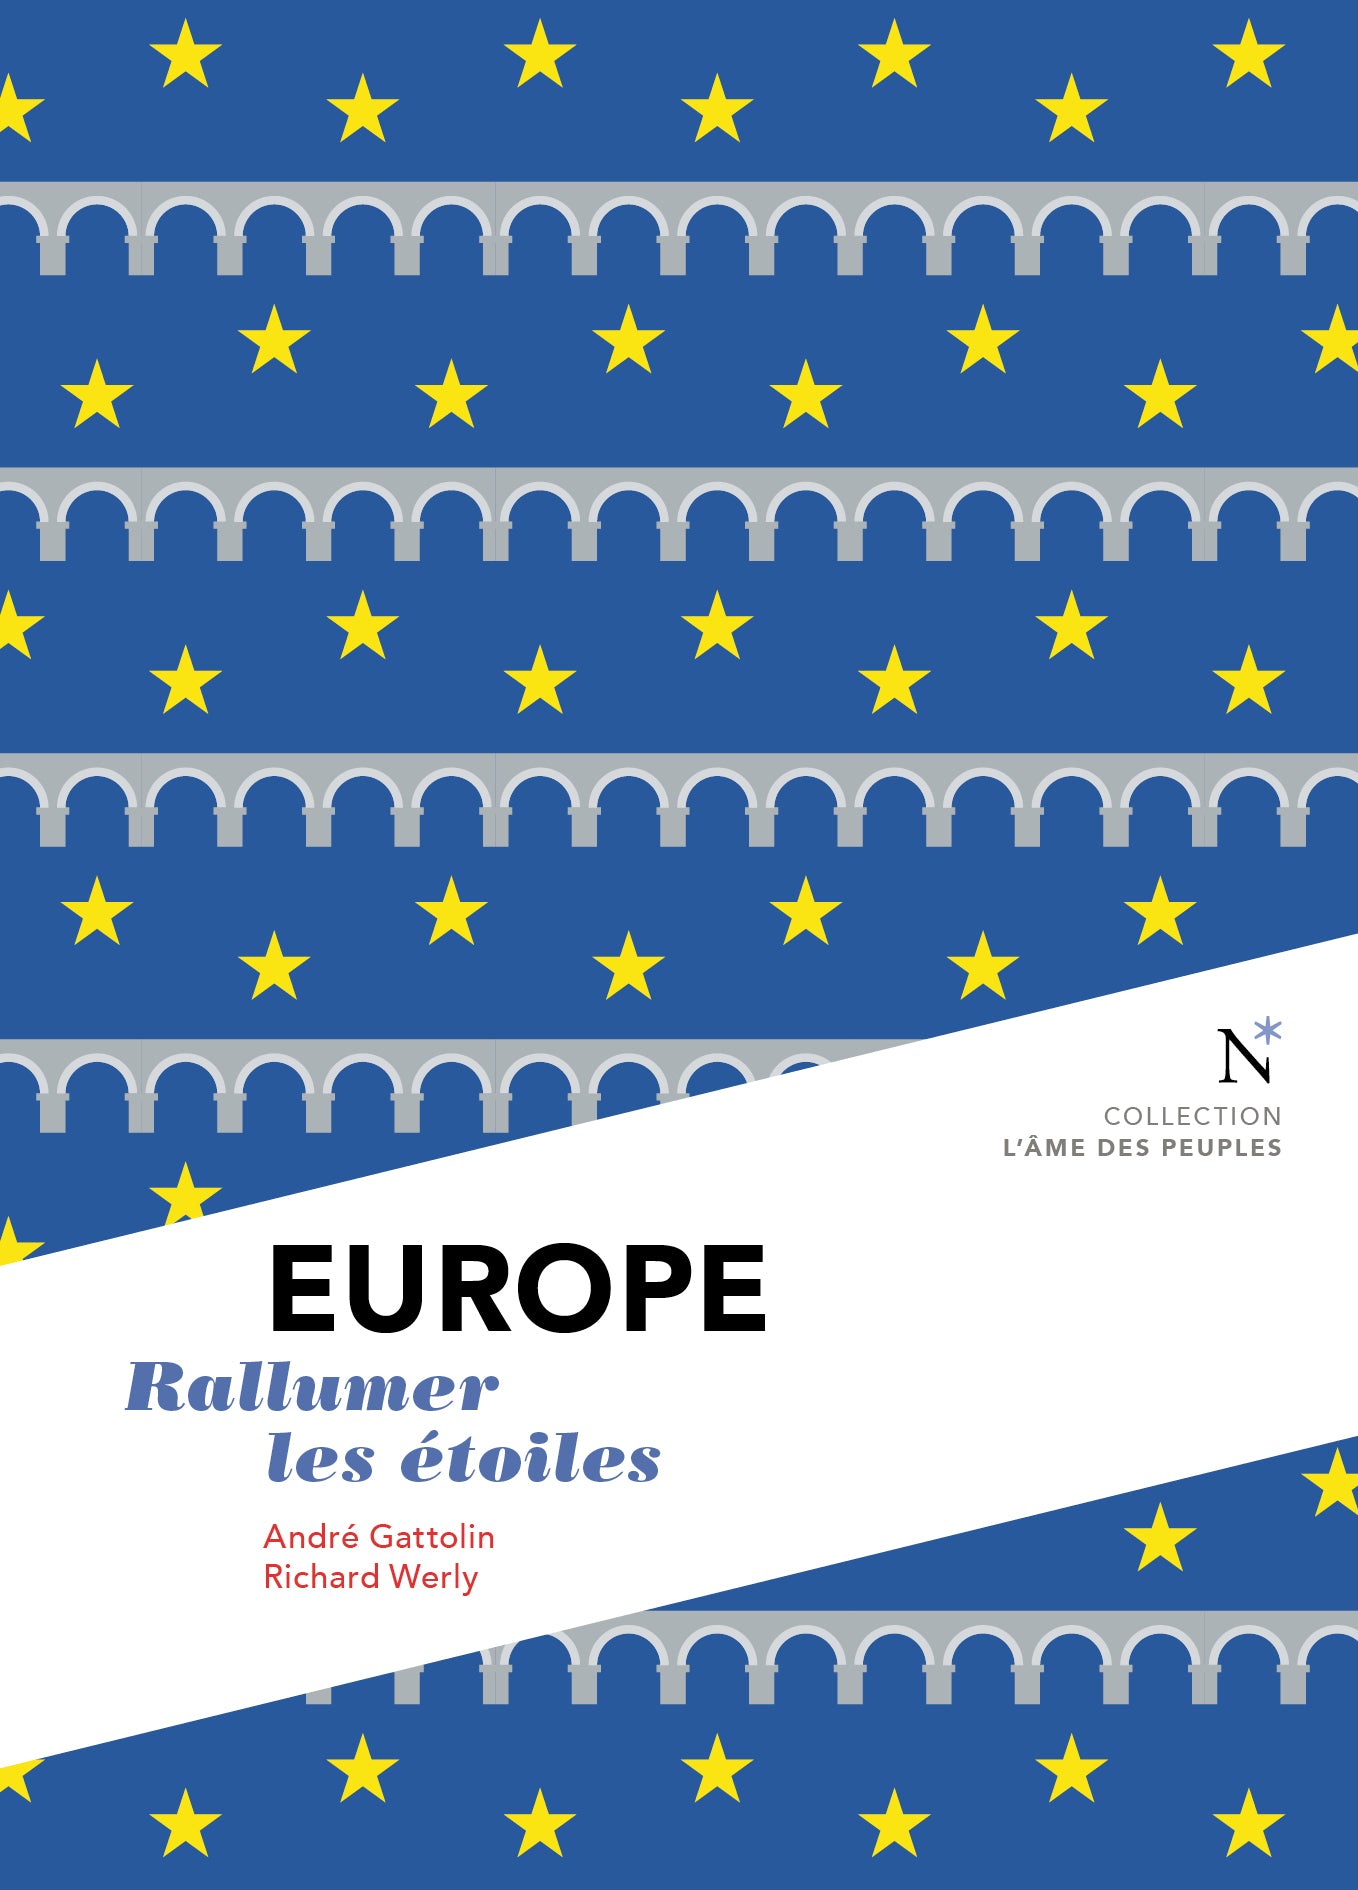 Europe. Rallumer les étoiles - André Gattolin / Richard Werly